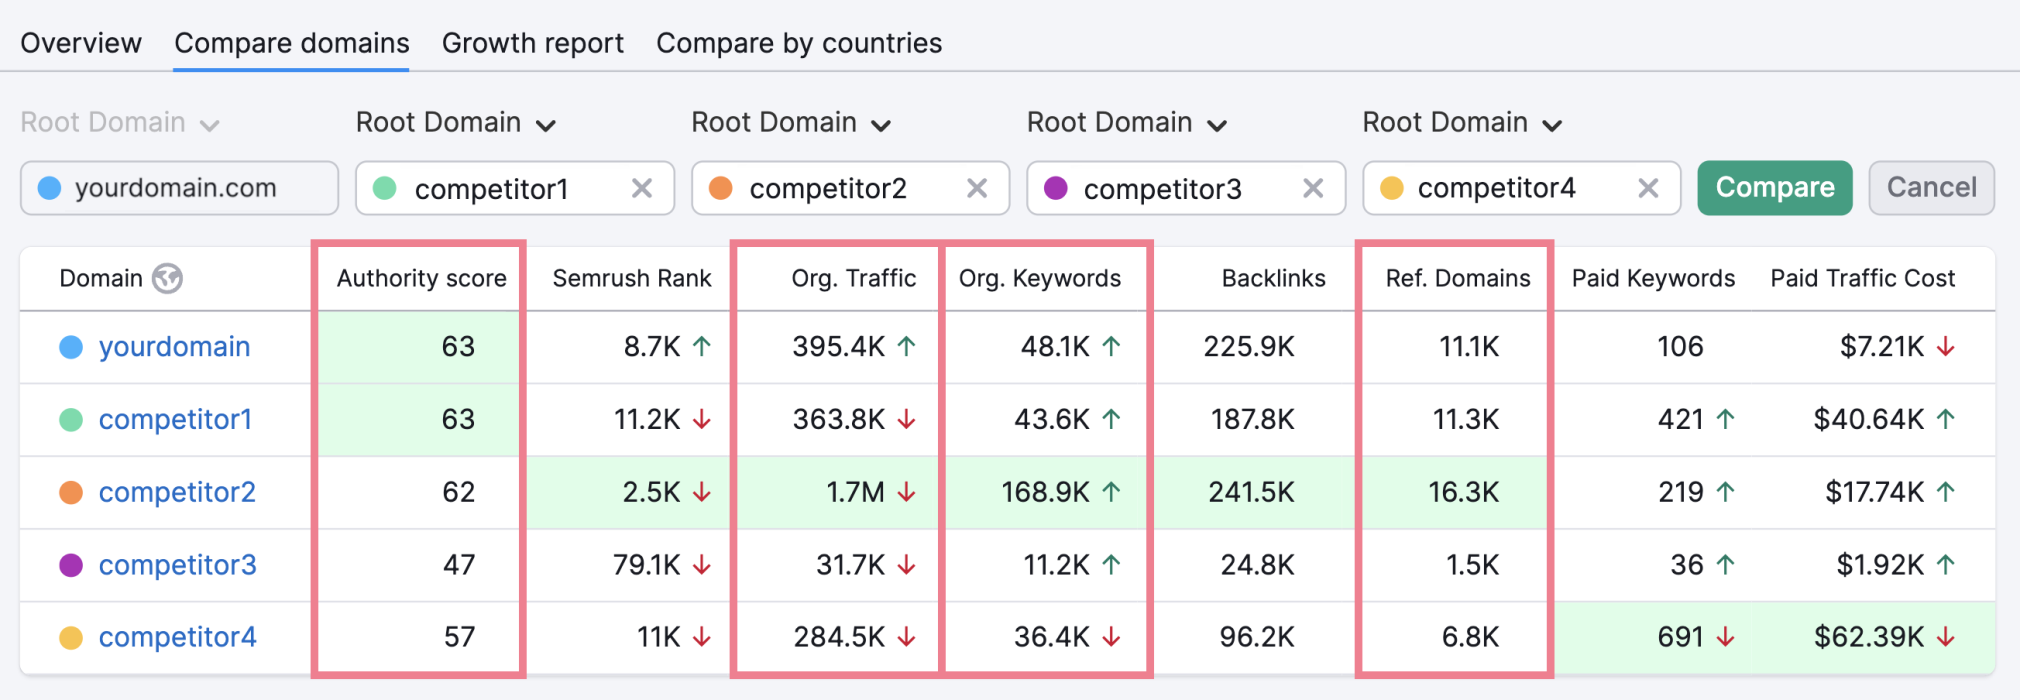 domain overview compare competitors metrics